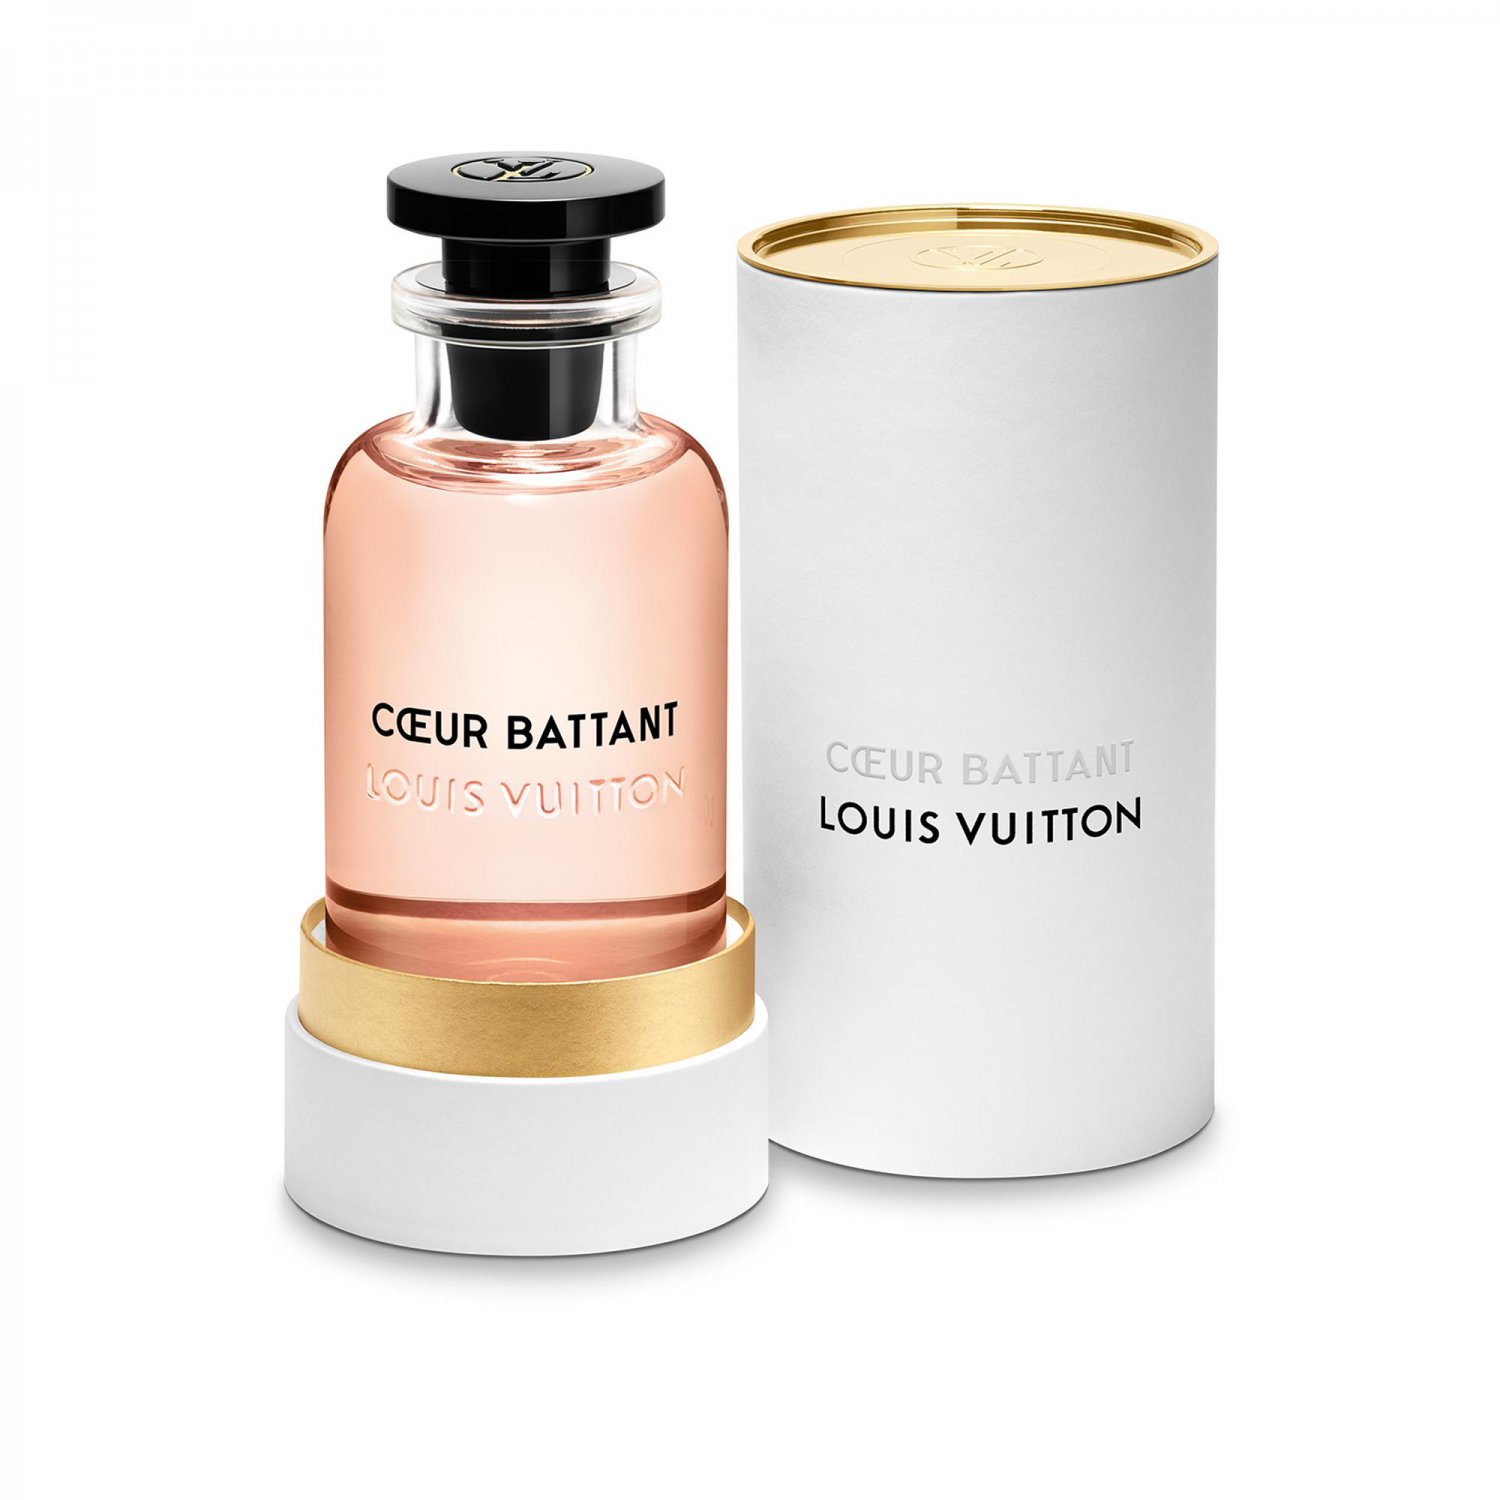 LOUIS VUITTON COEUR BATTANT Perfume Eau de Parfum 6.8 oz Spray.